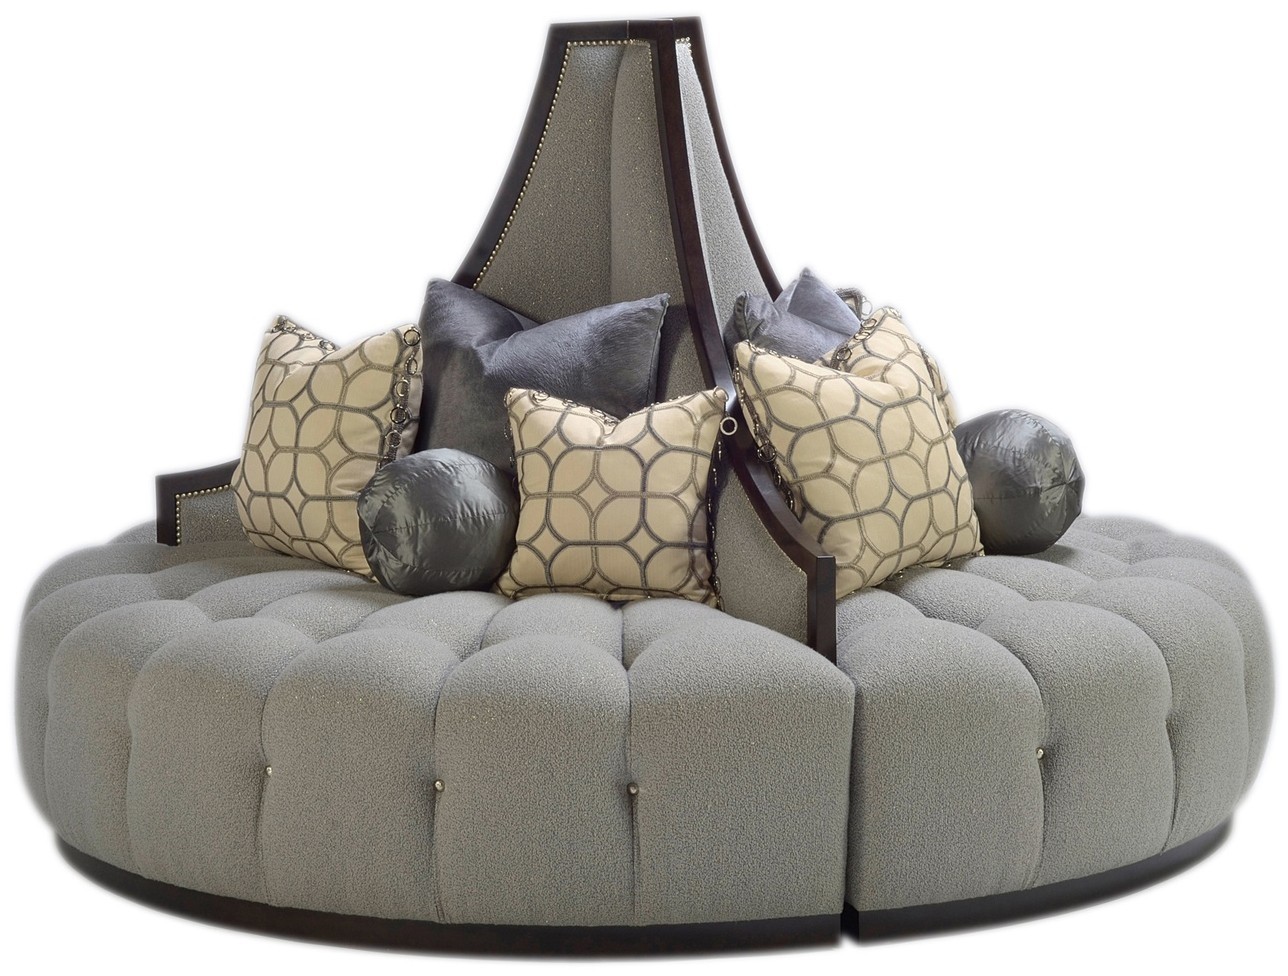 Elegant dove grey round sofa